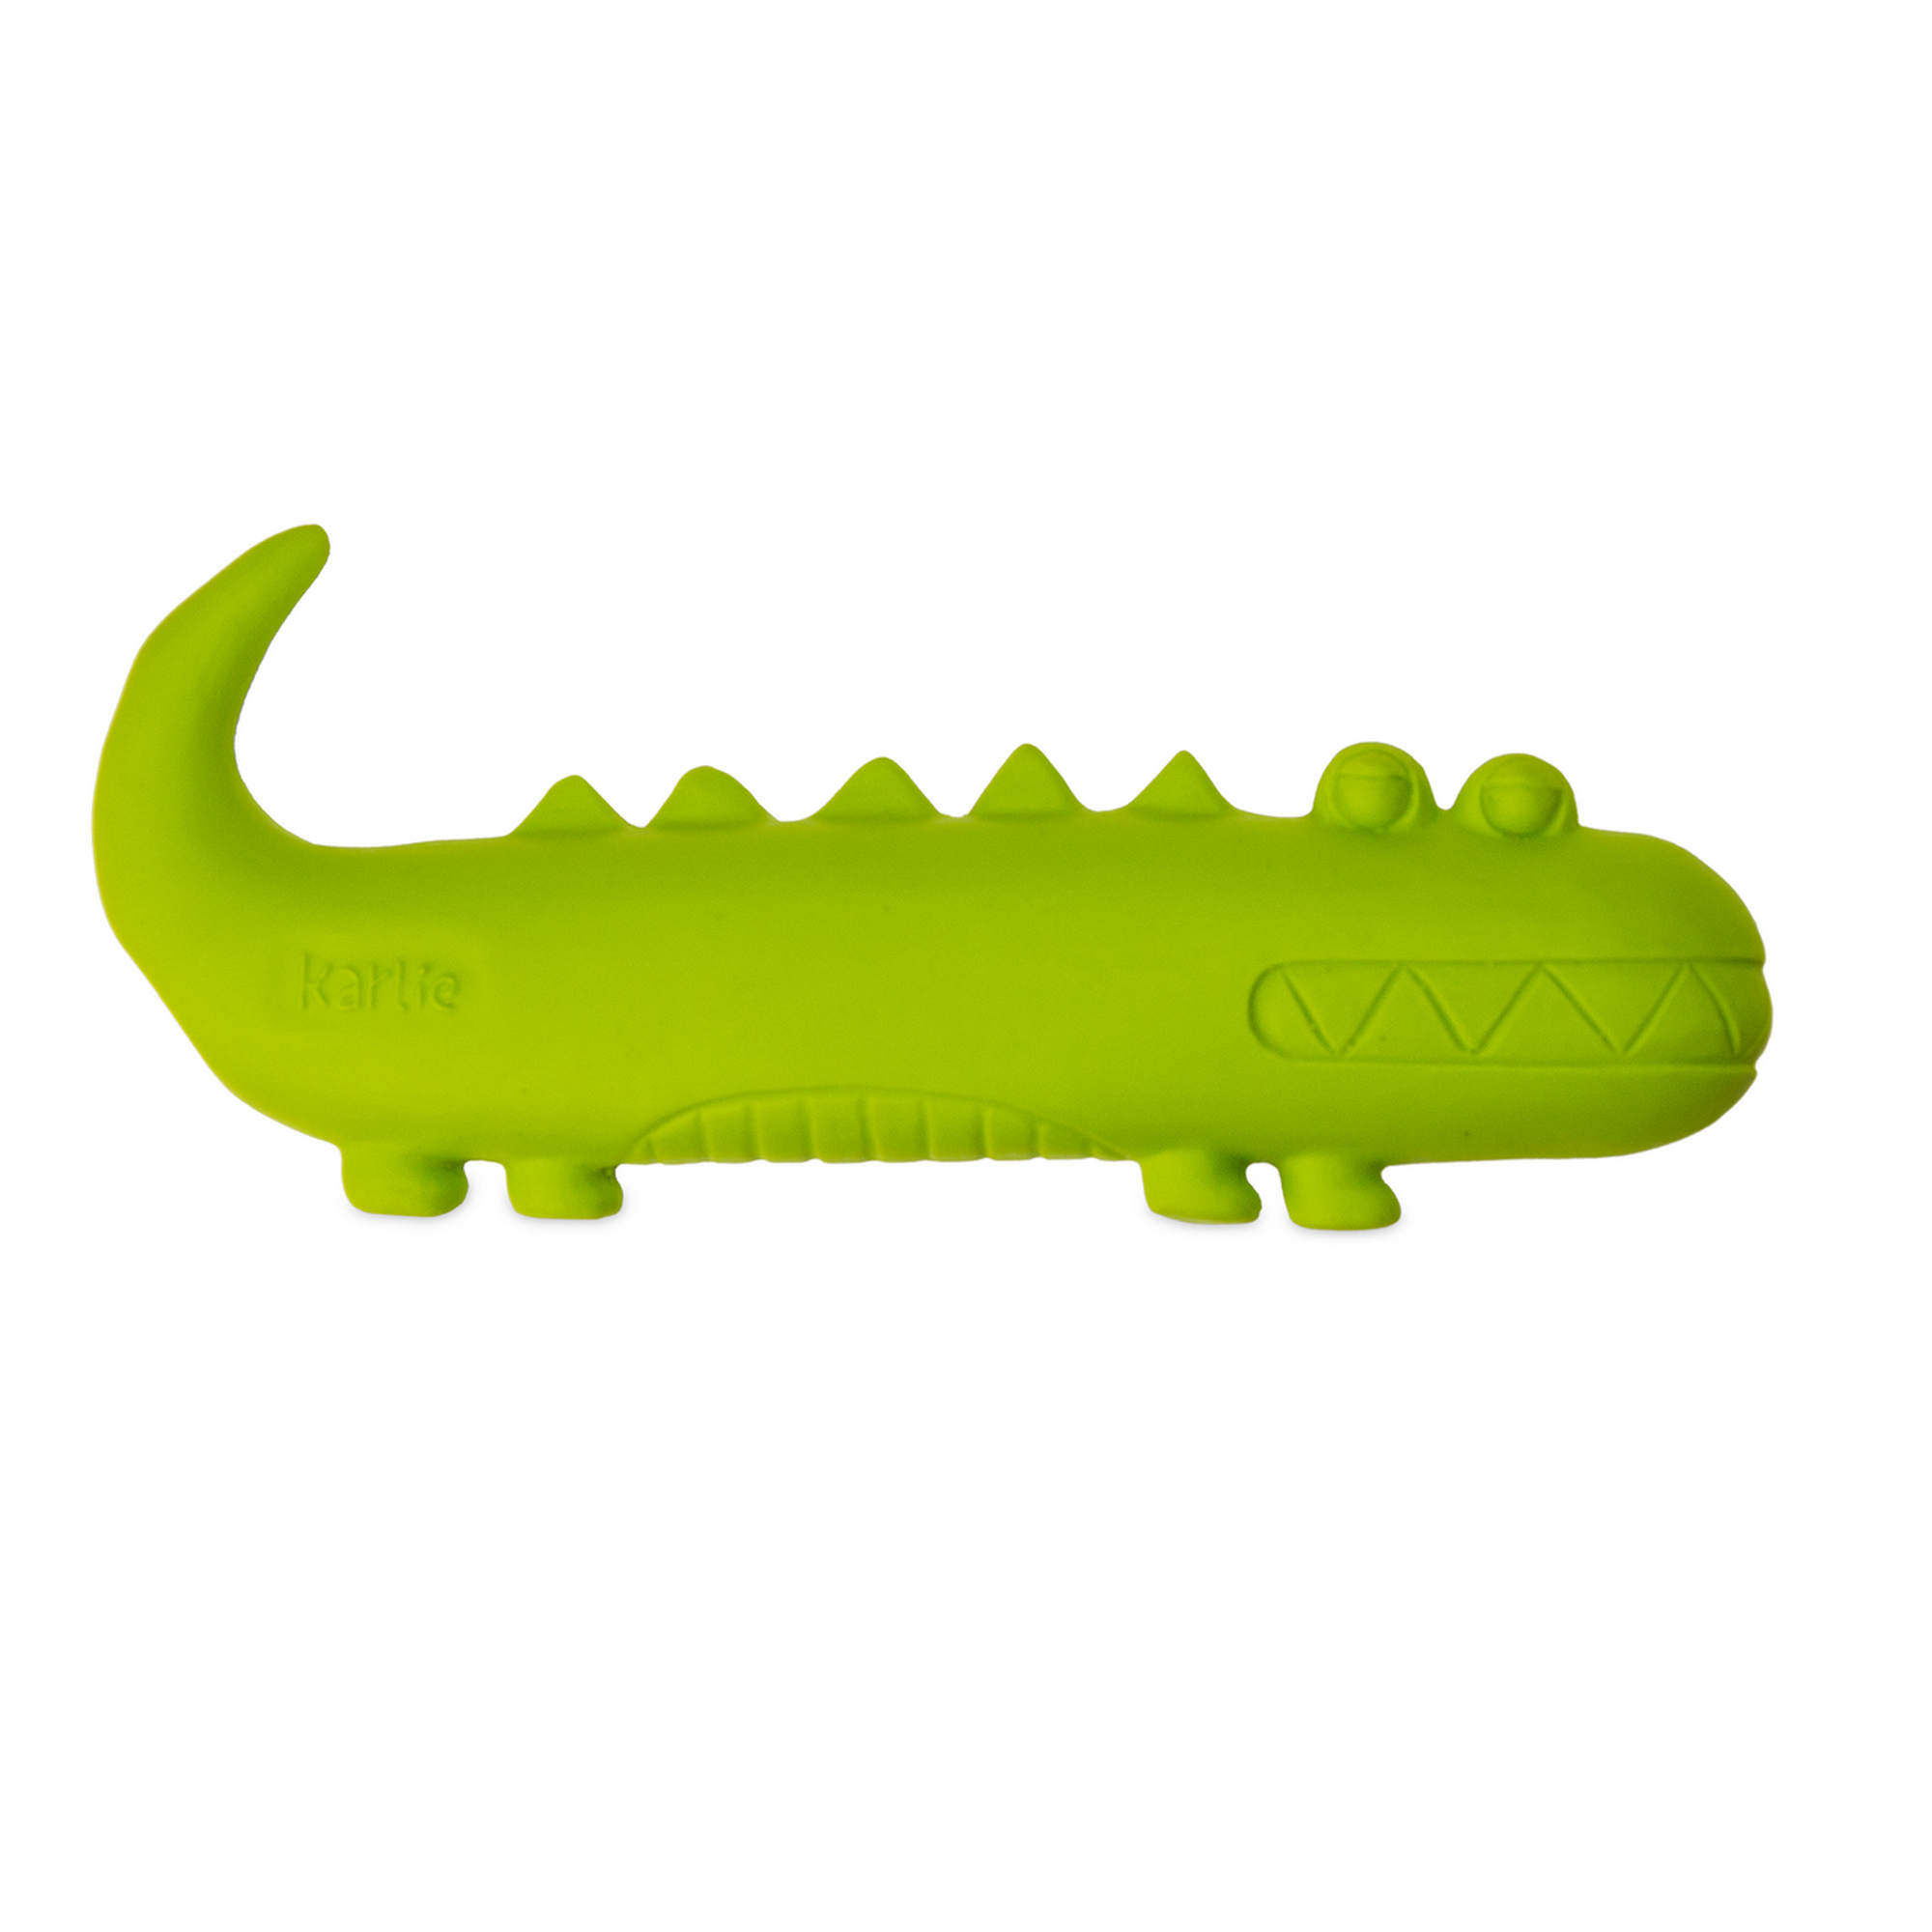 Apportierspielzeug Reptilie grün Latex 19,5 cm + product picture